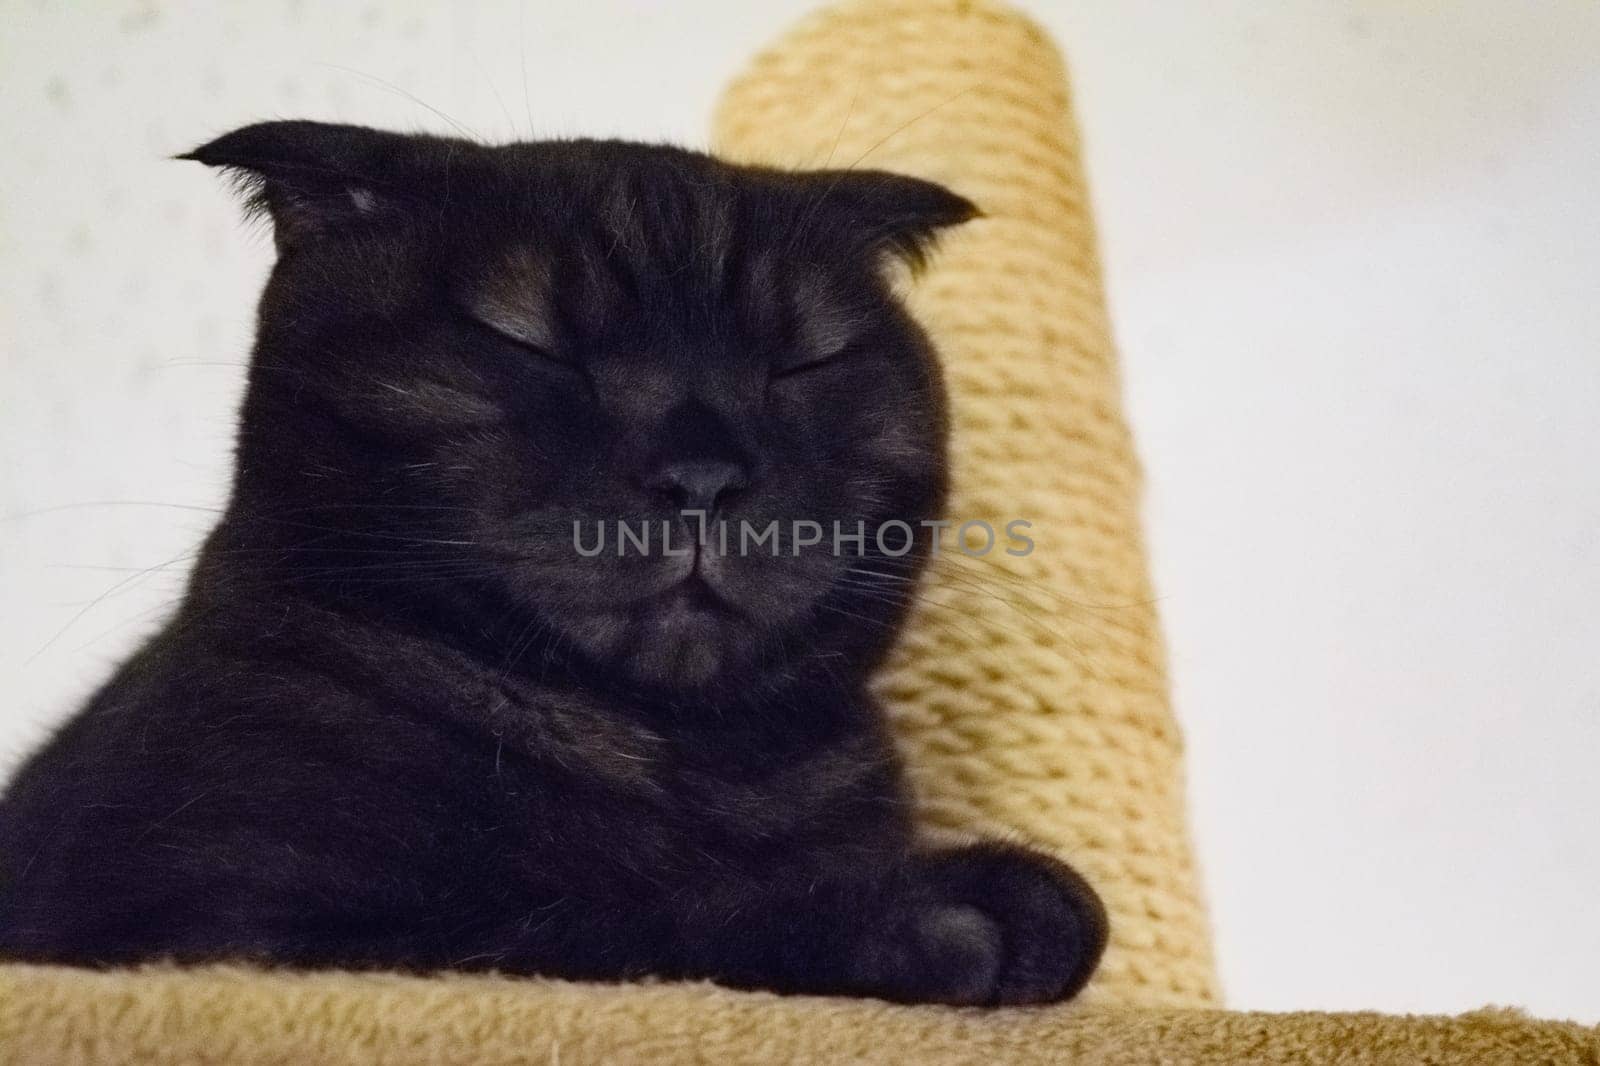 A sleeping black cat by jameshumble